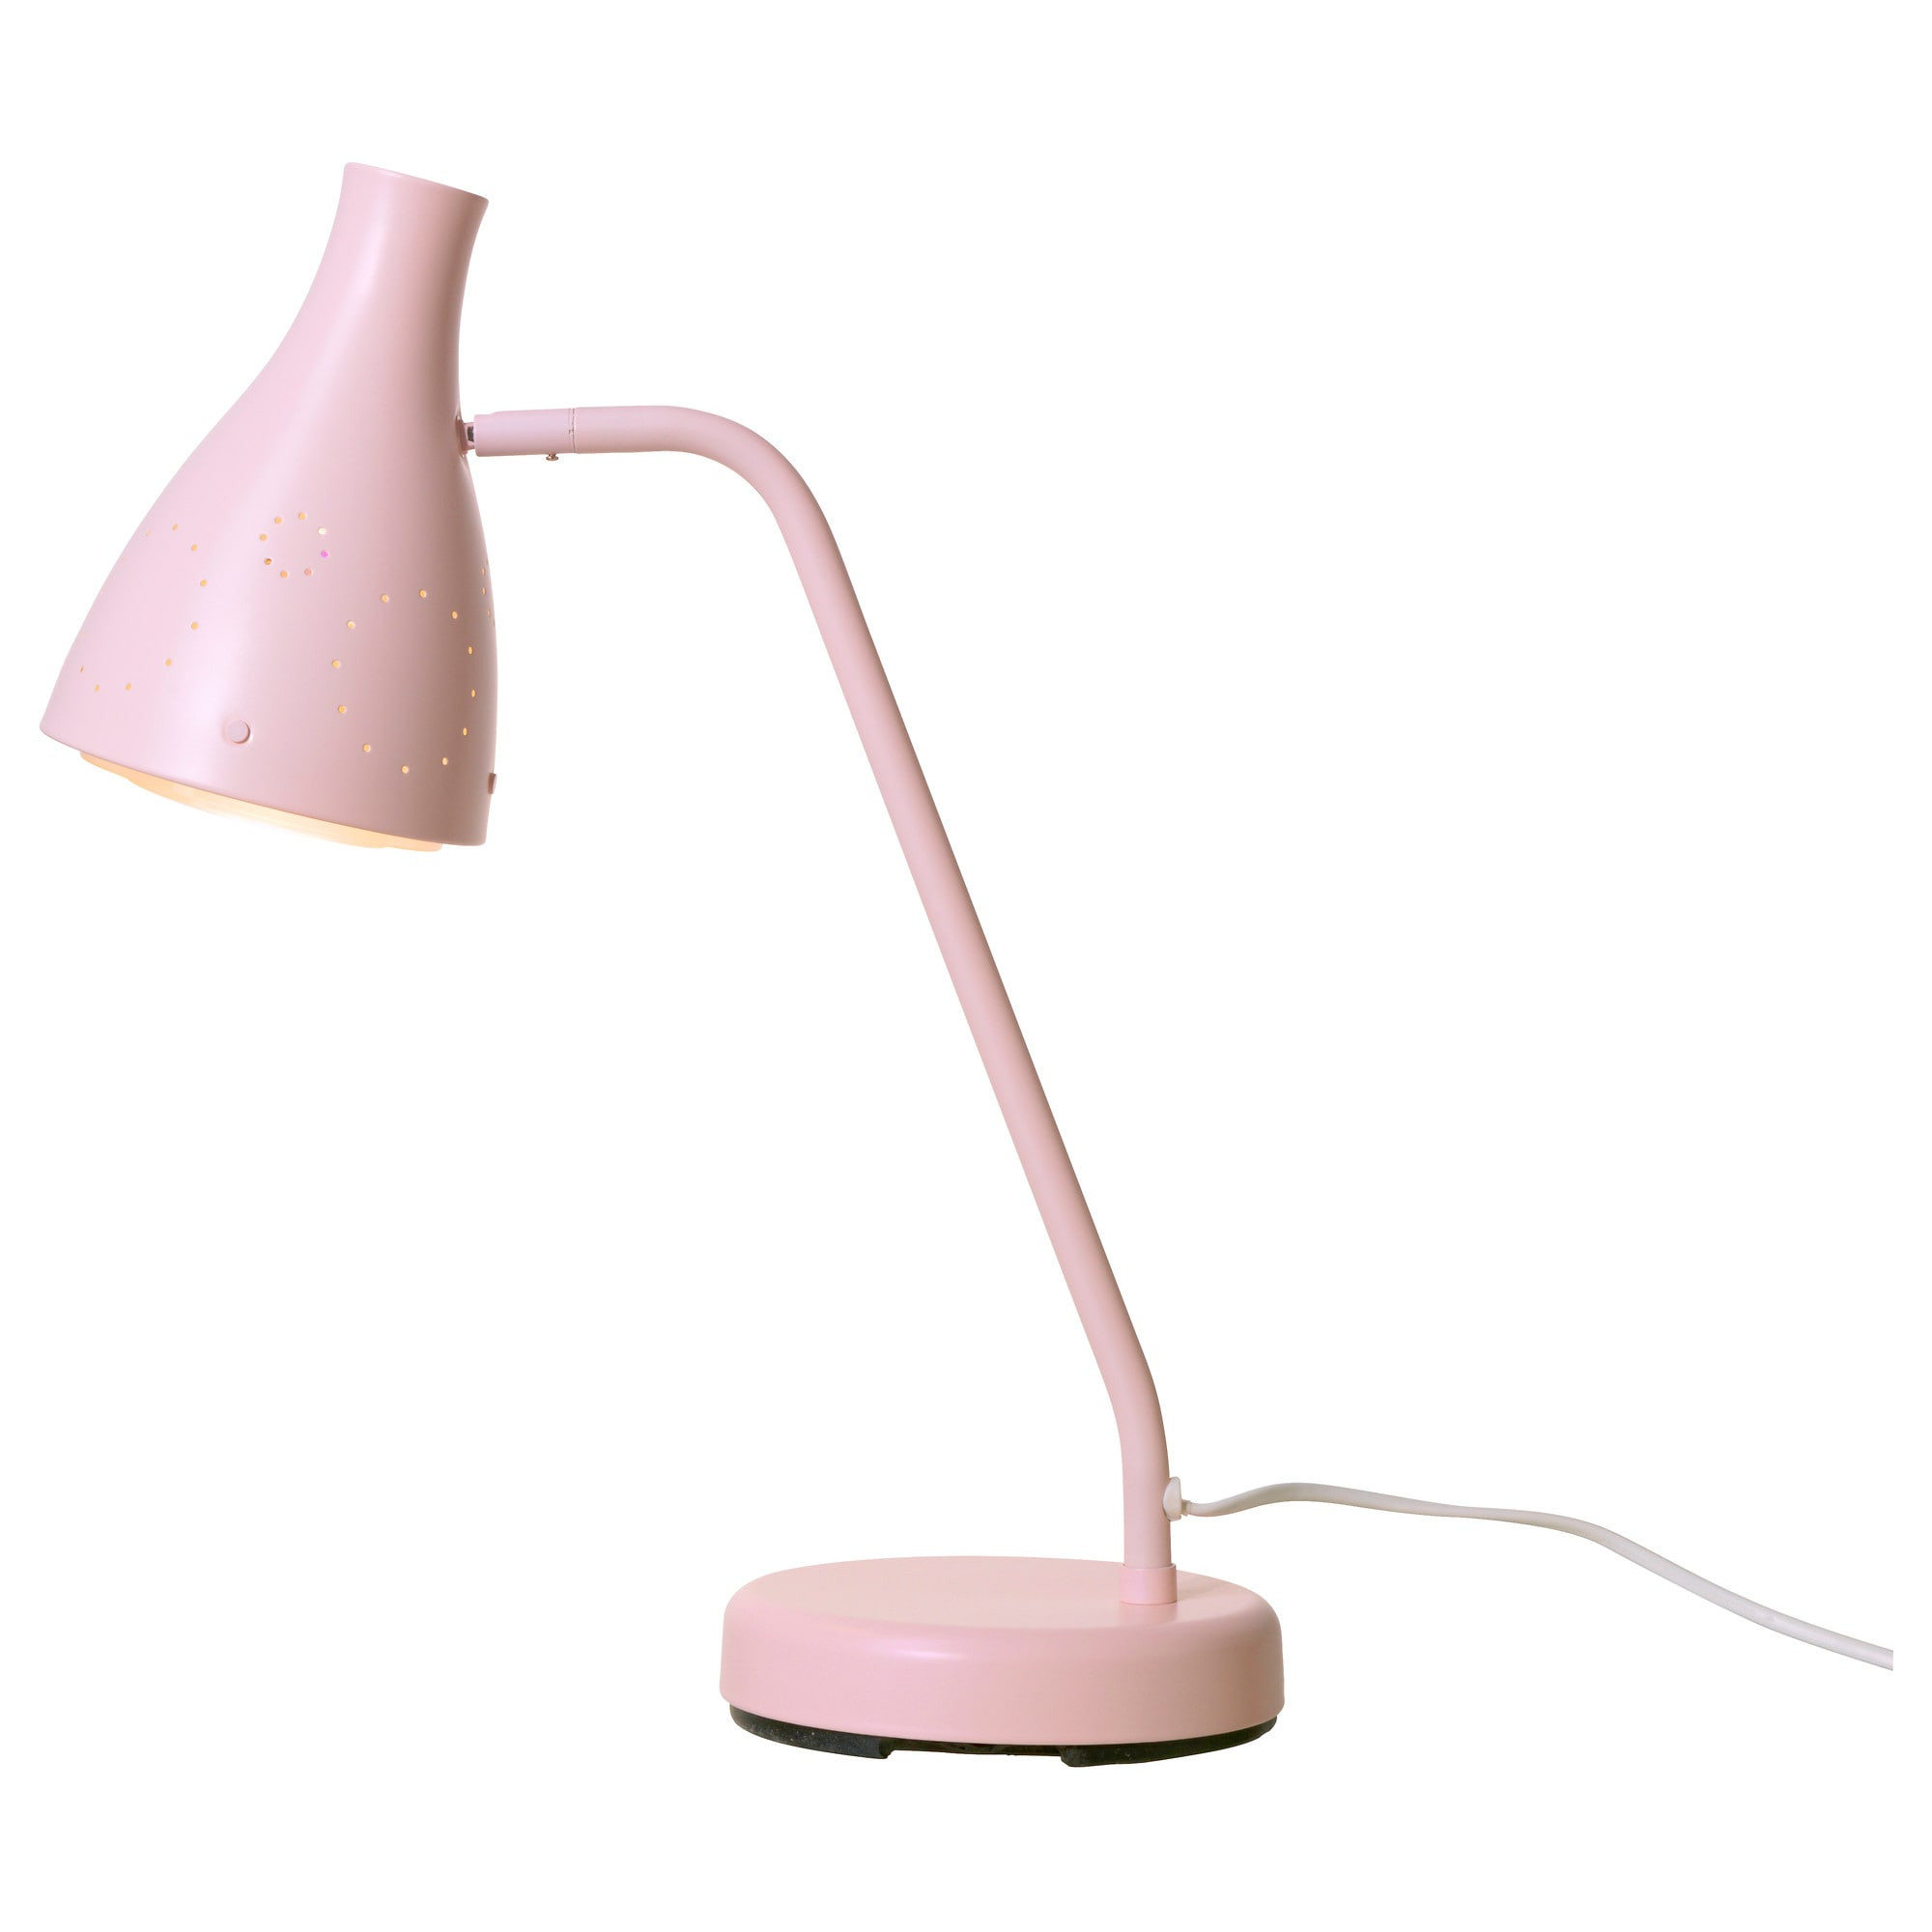 Best ideas about Ikea Desk Lamps
. Save or Pin Nursery Lighting Night lights Kids Lamps IKEA Now.